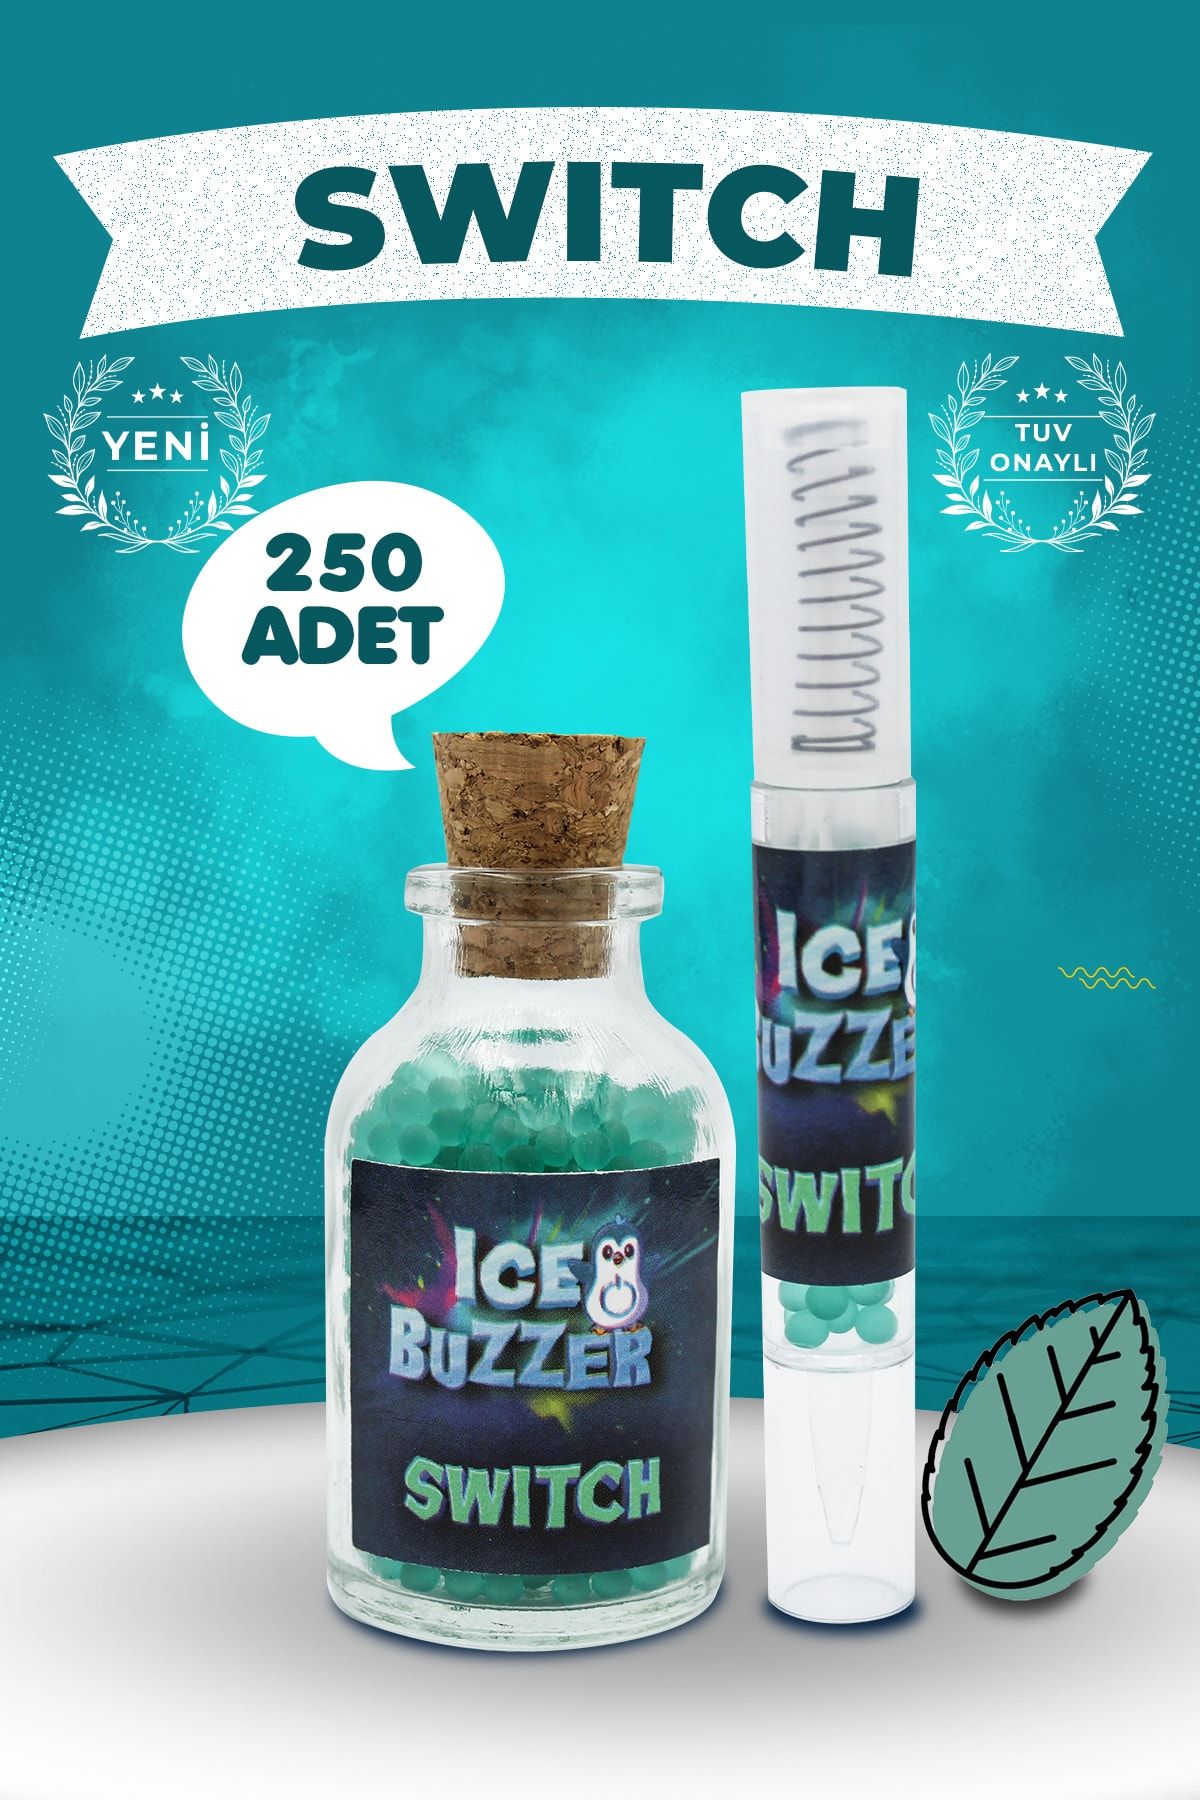 Crush Bomb Ice Buzzer Mentol Topu 250 Adet Nane Switch Aroması+aplikatör